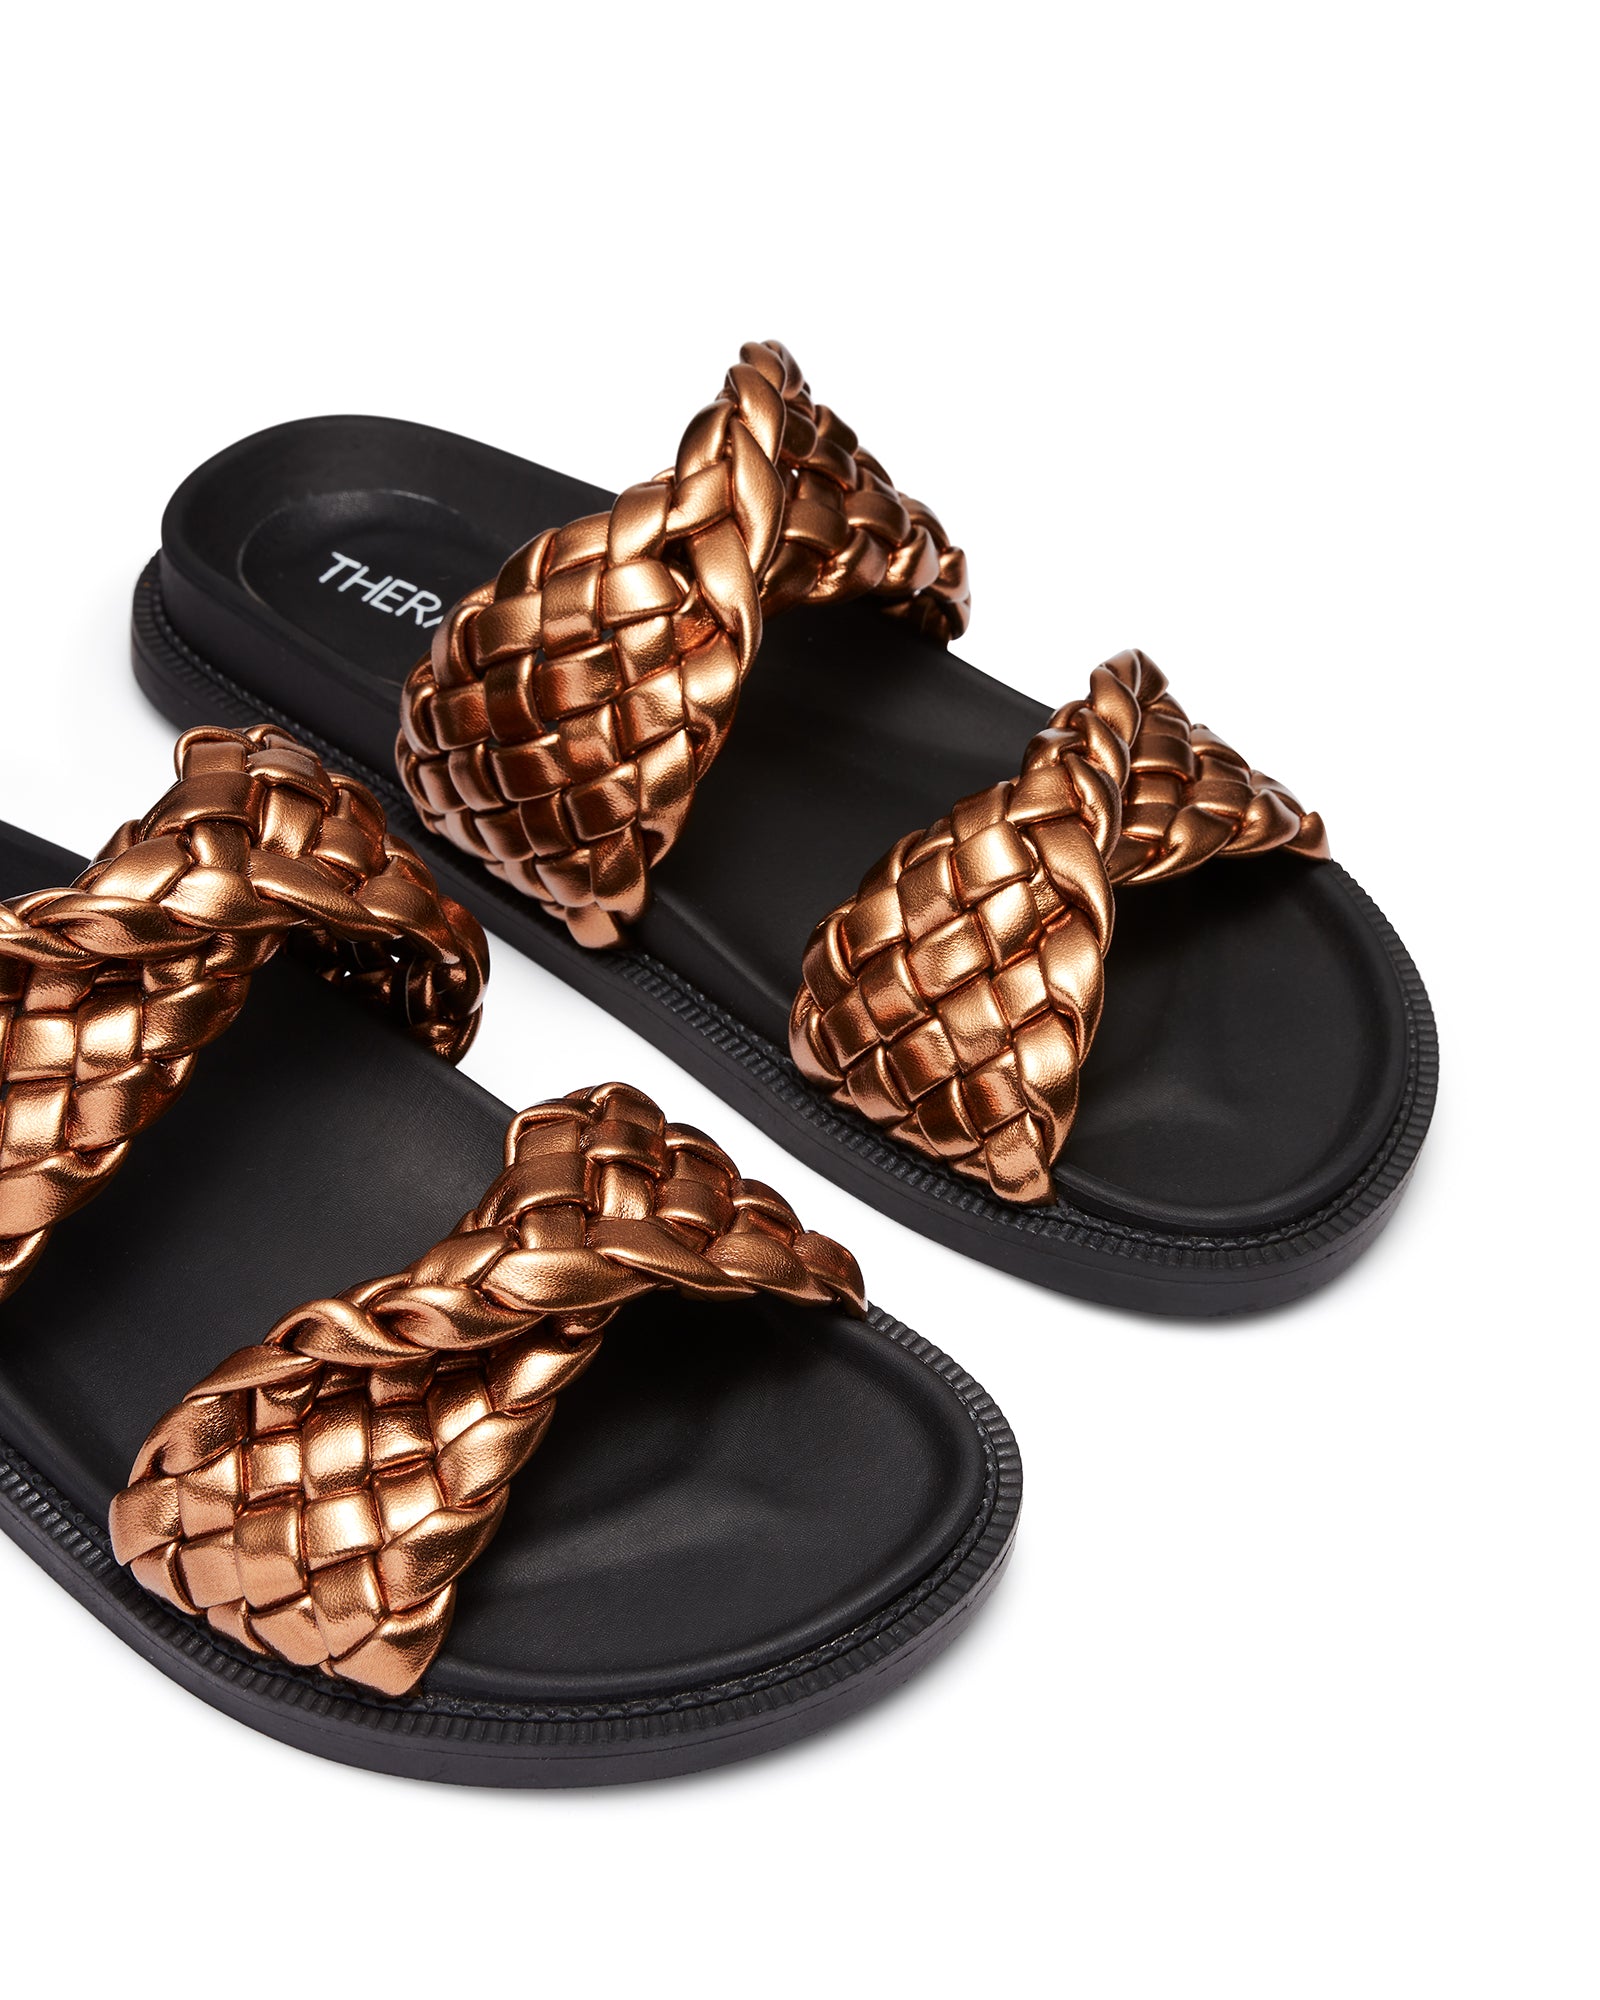 Therapy Shoes Evil Bronze | Women's Sandals | Slides | Flatform | Woven